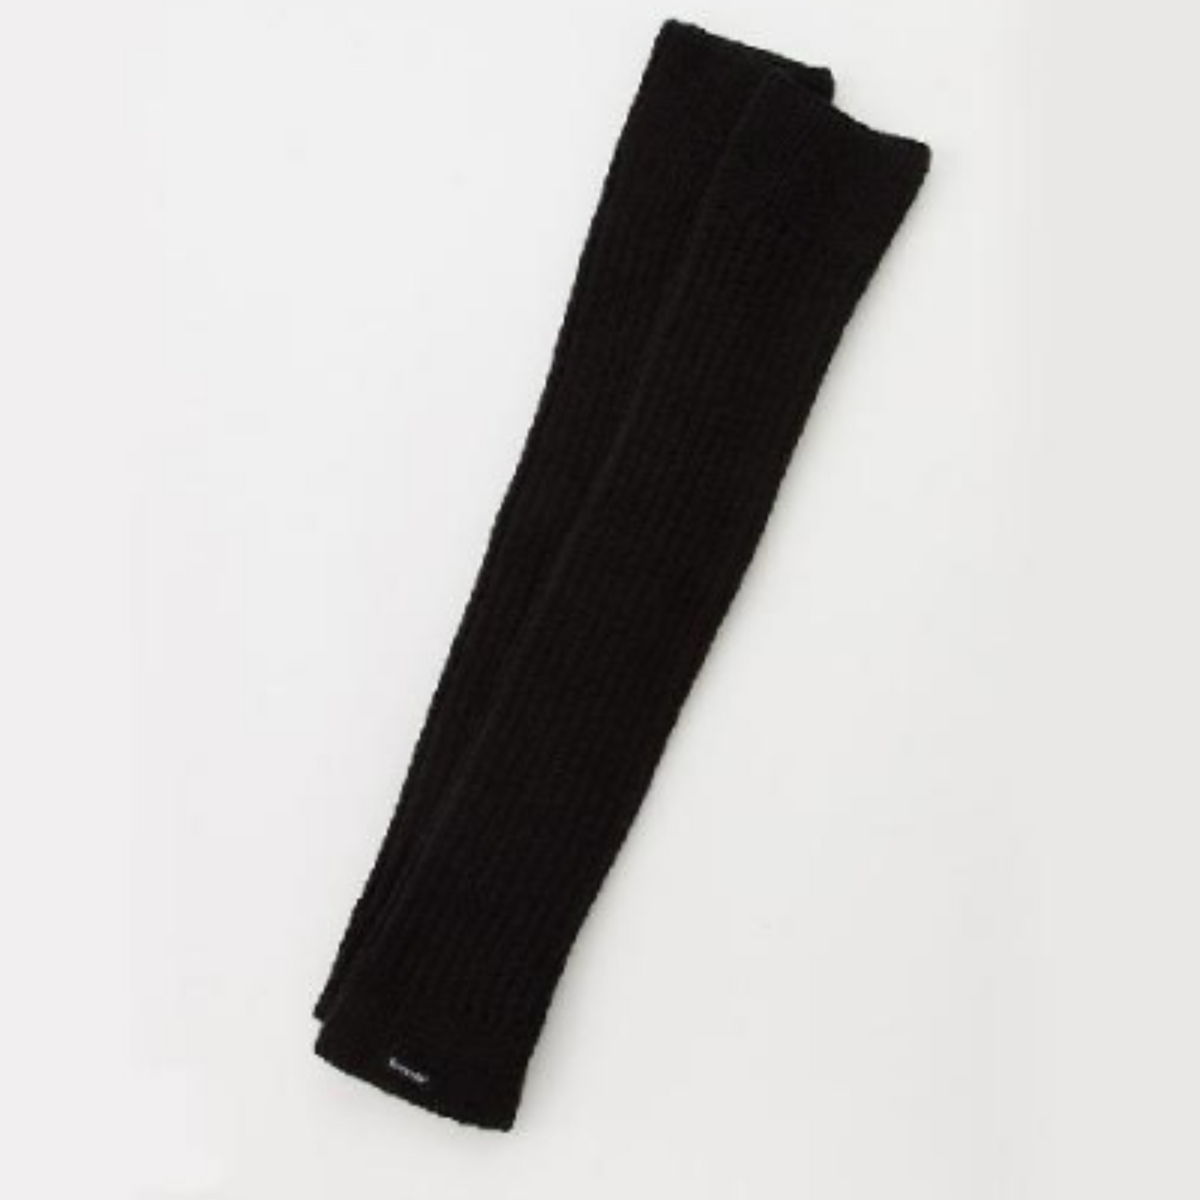 Knitido Ribbed Leg Warmer in black on display